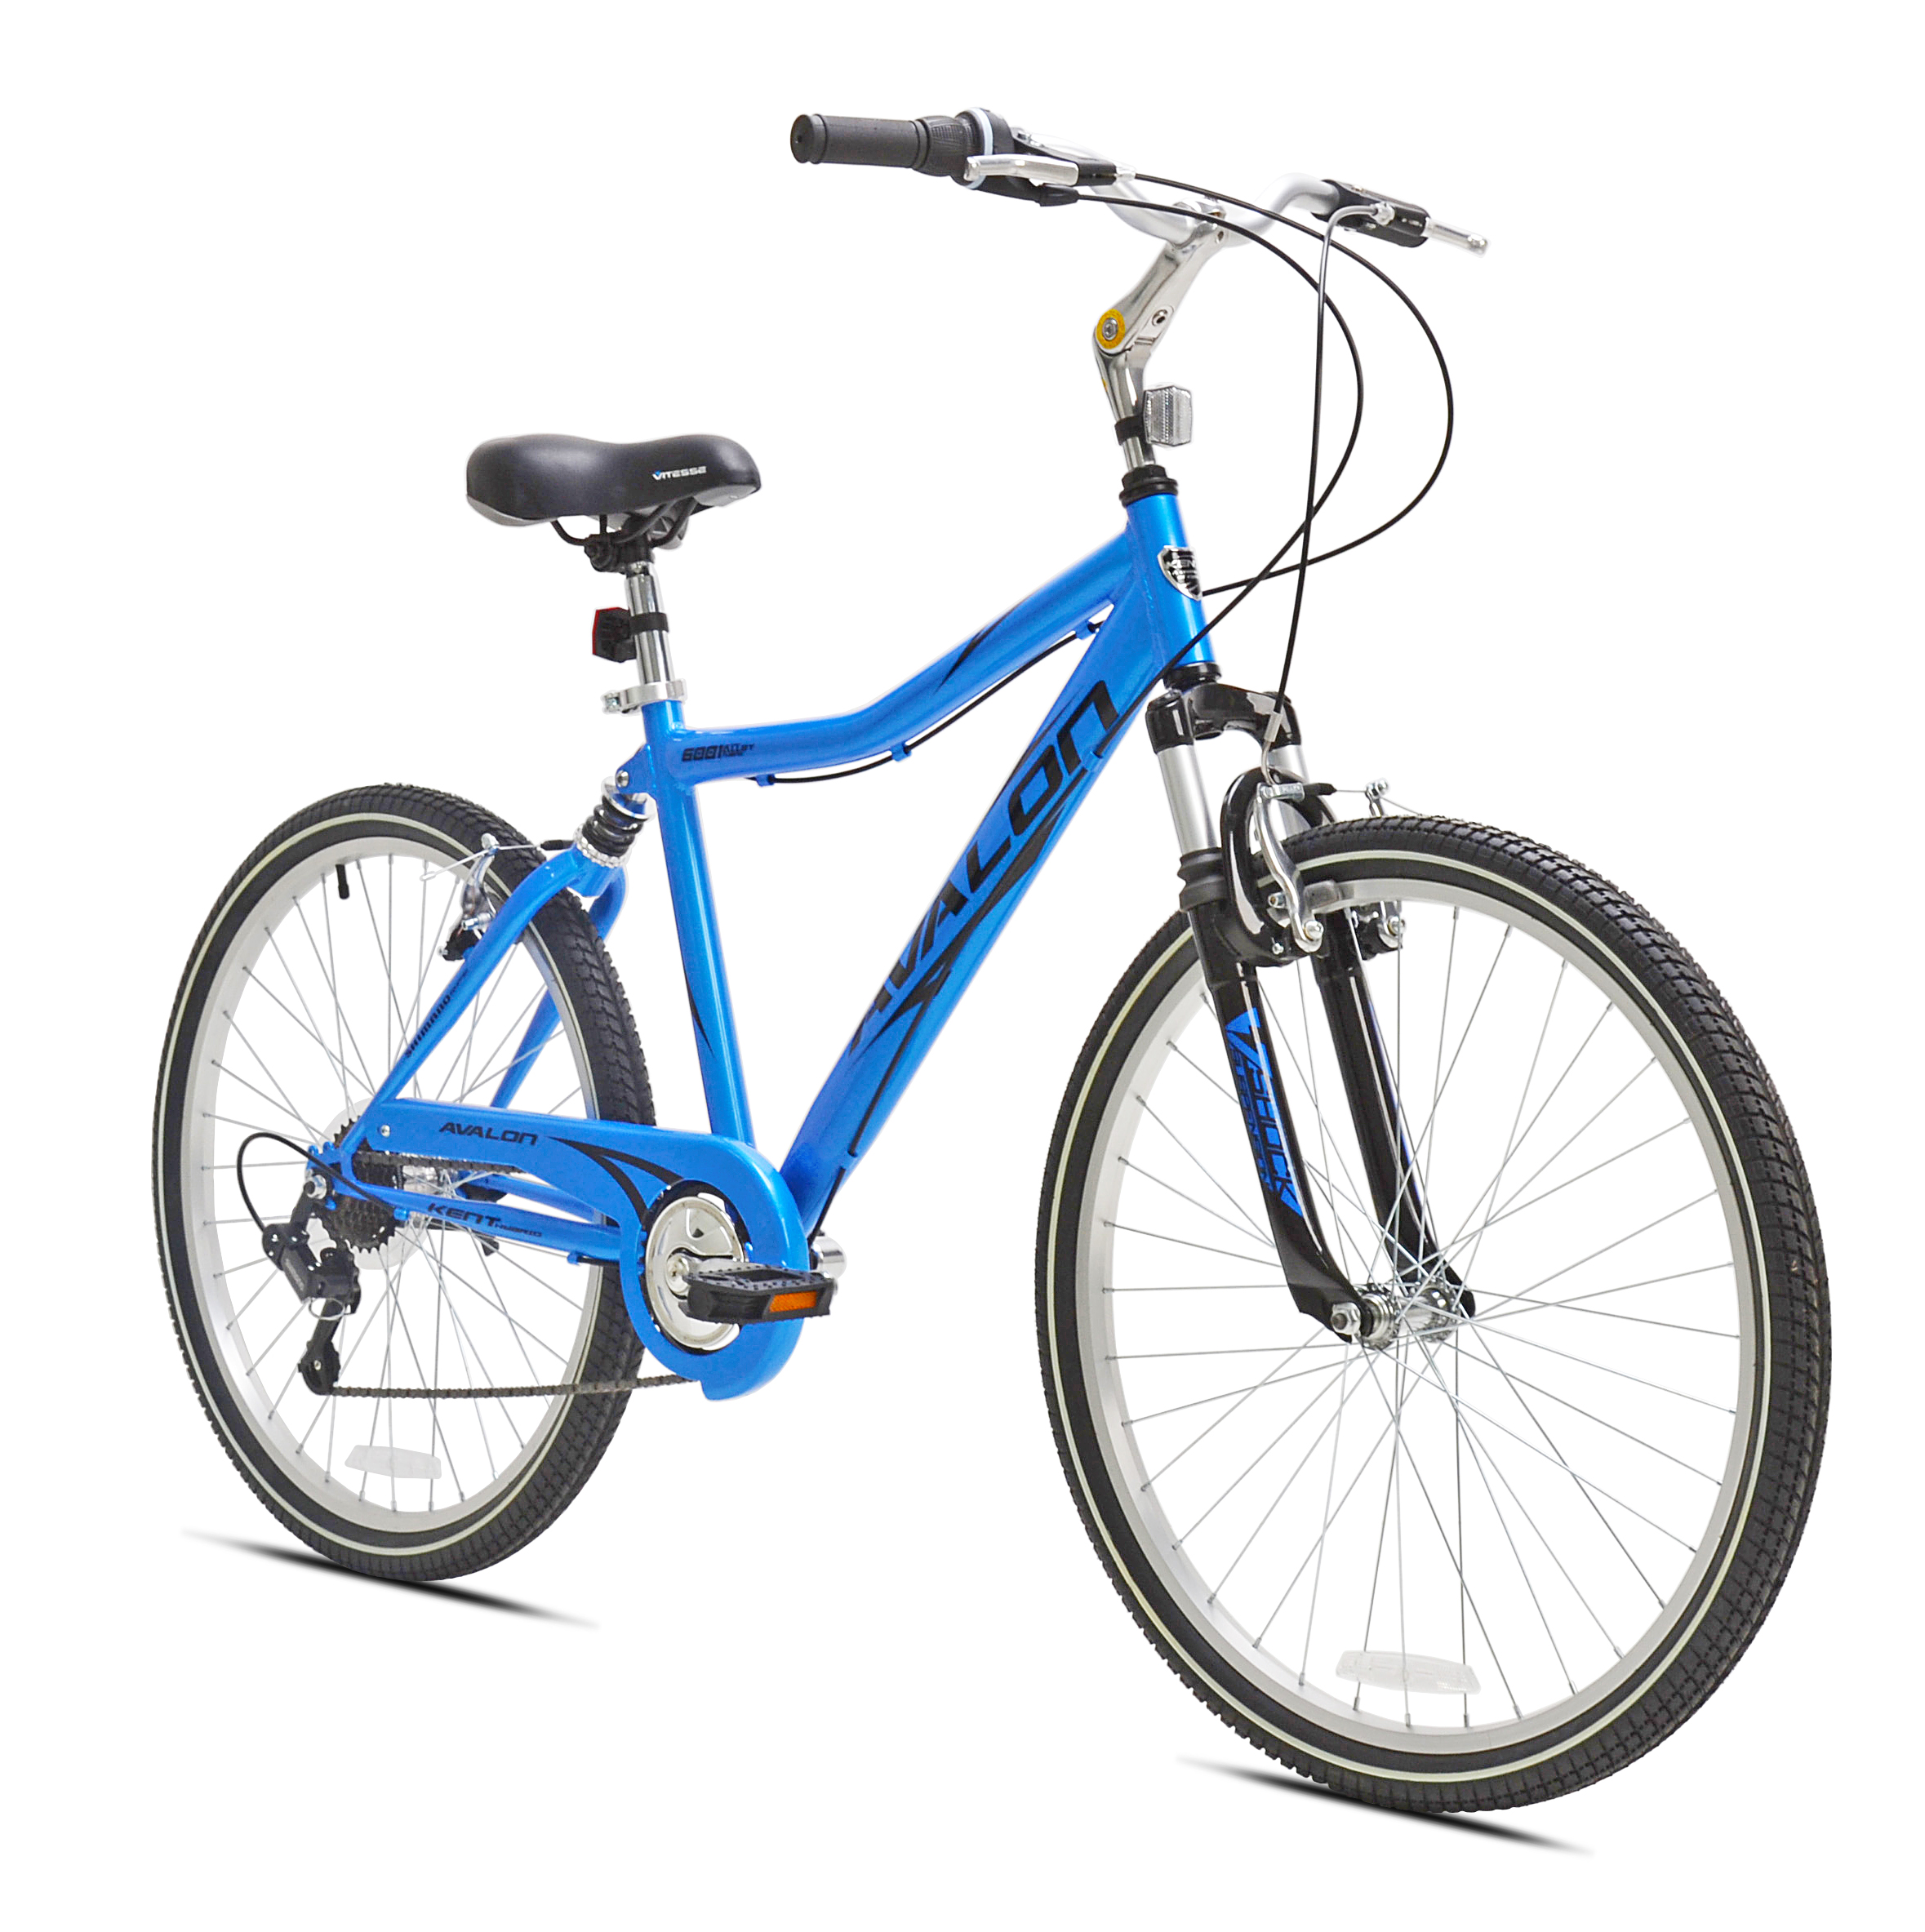 Kent Bicycle 26" Avalon Comfort-Hybrid Men's Bicycle, Blue - image 3 of 7